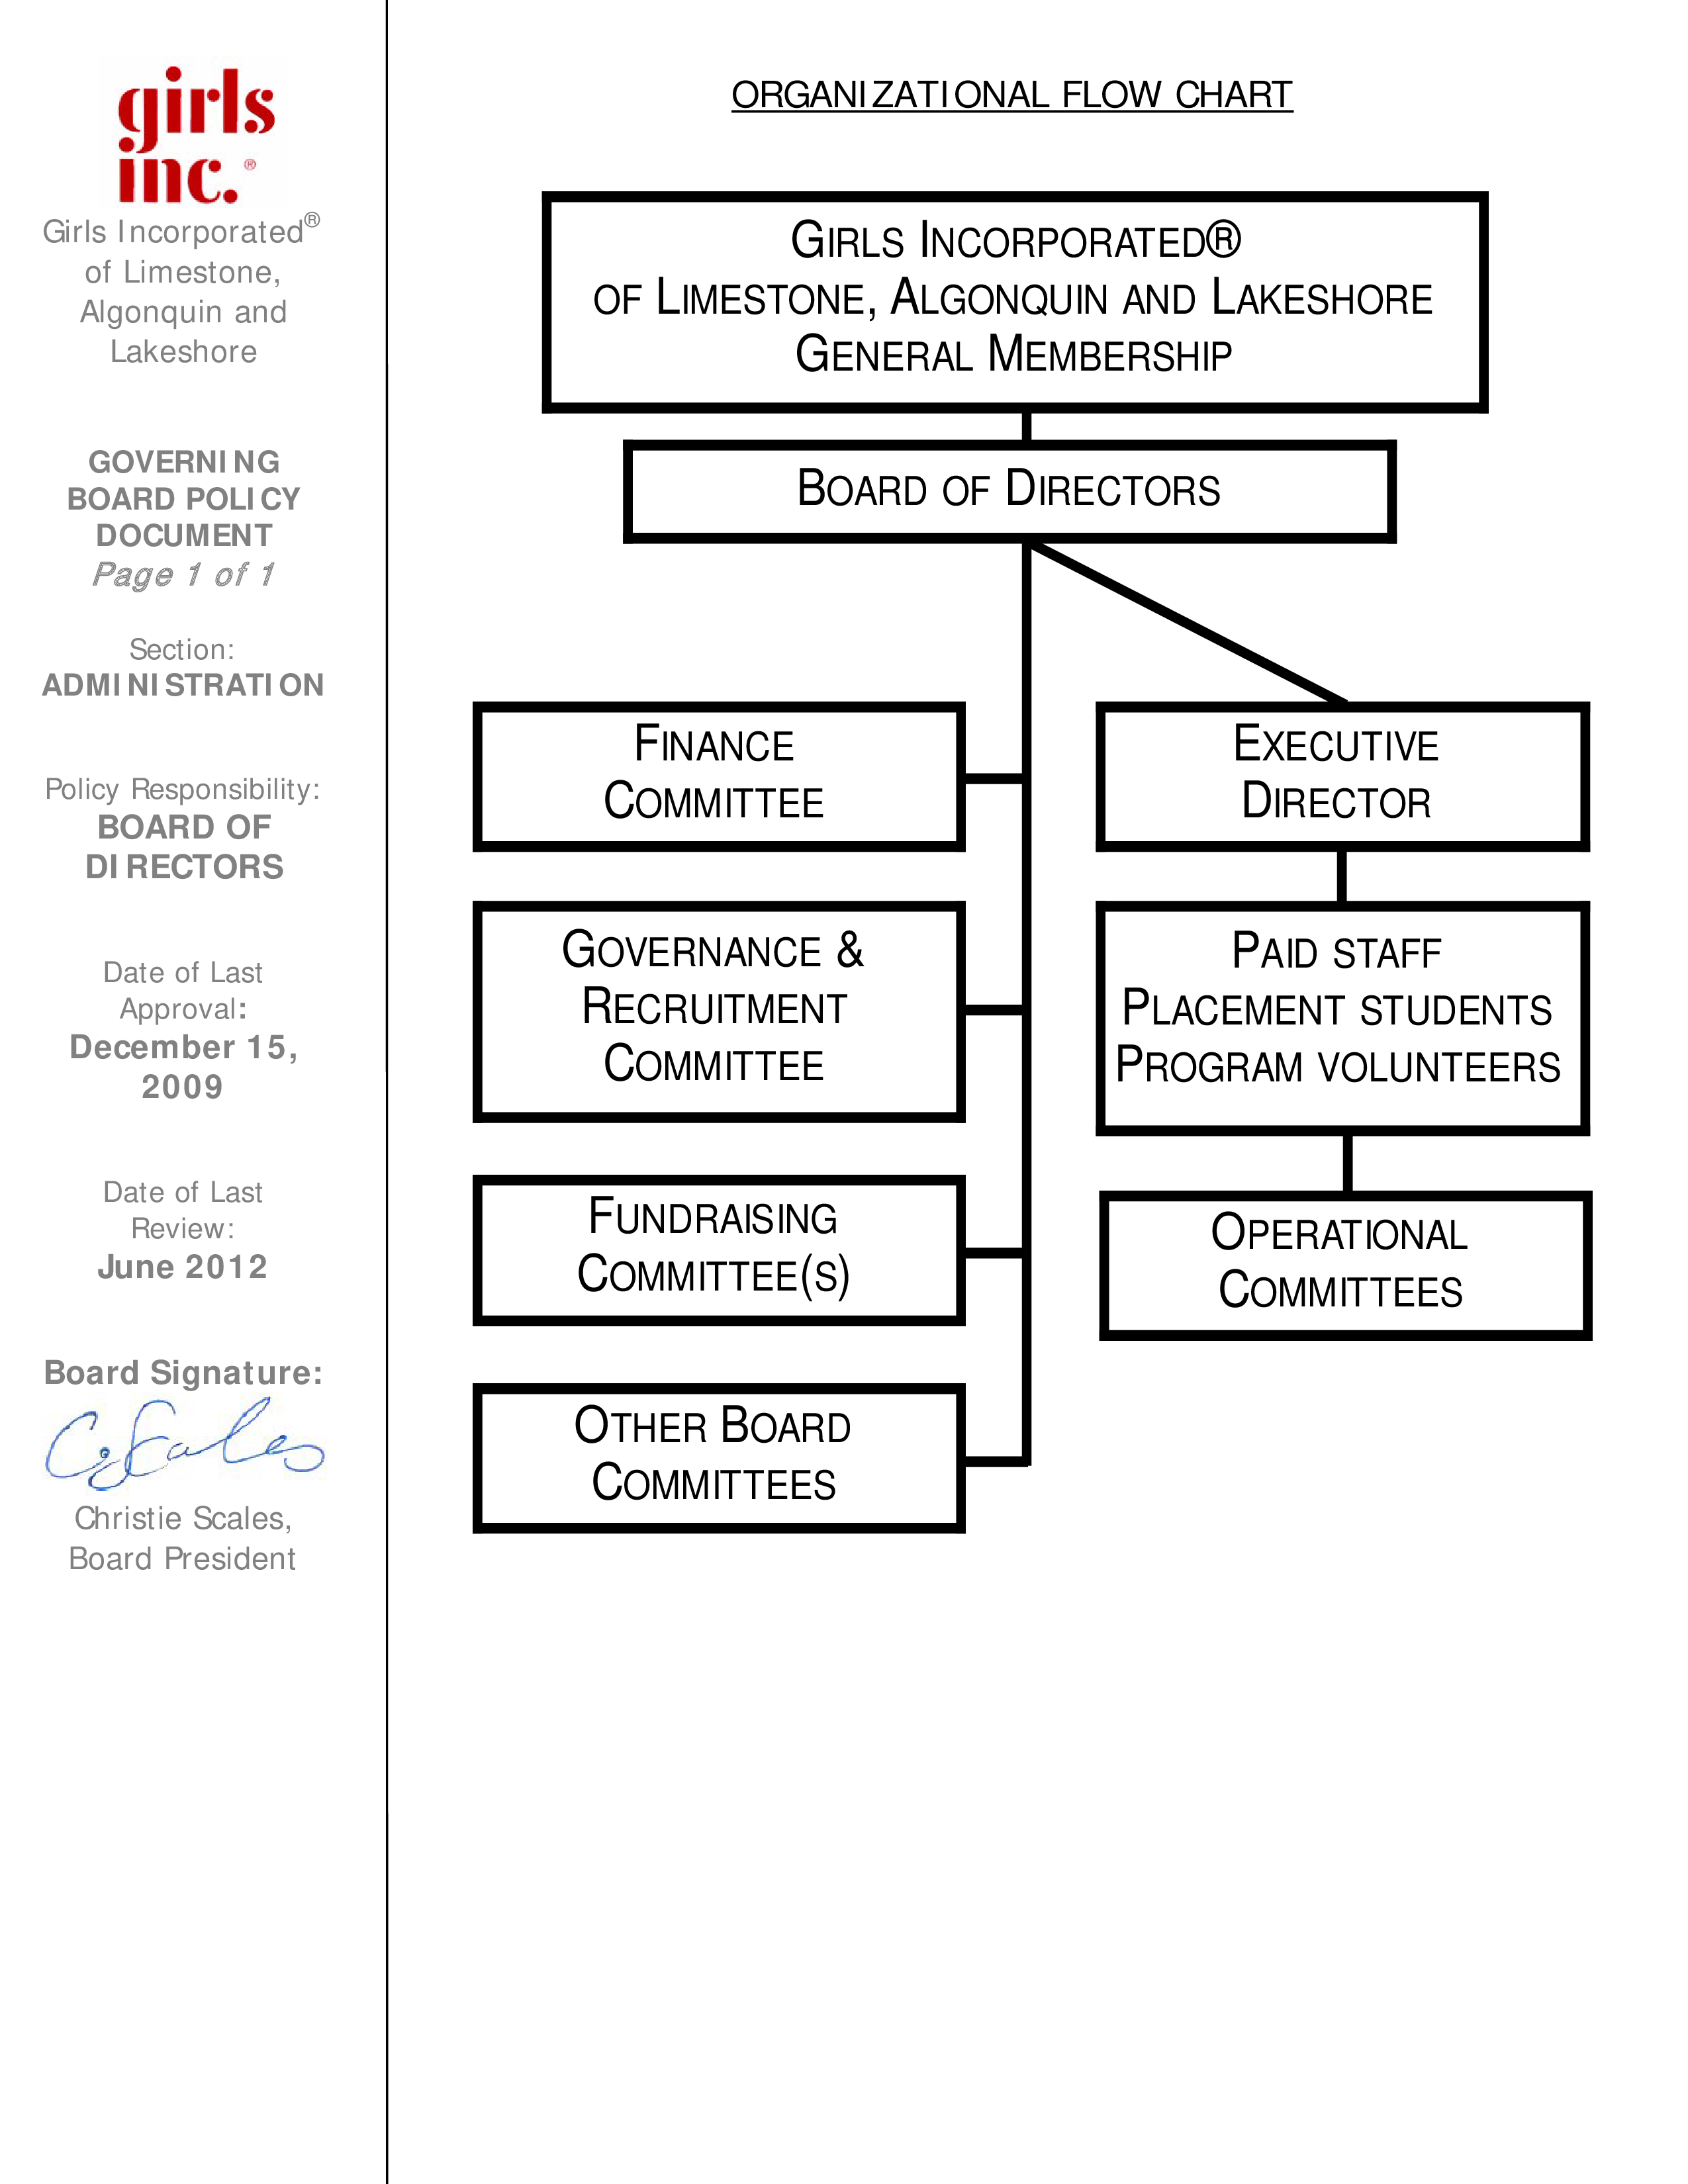 organizational-chart-templates-at-allbusinesstemplates